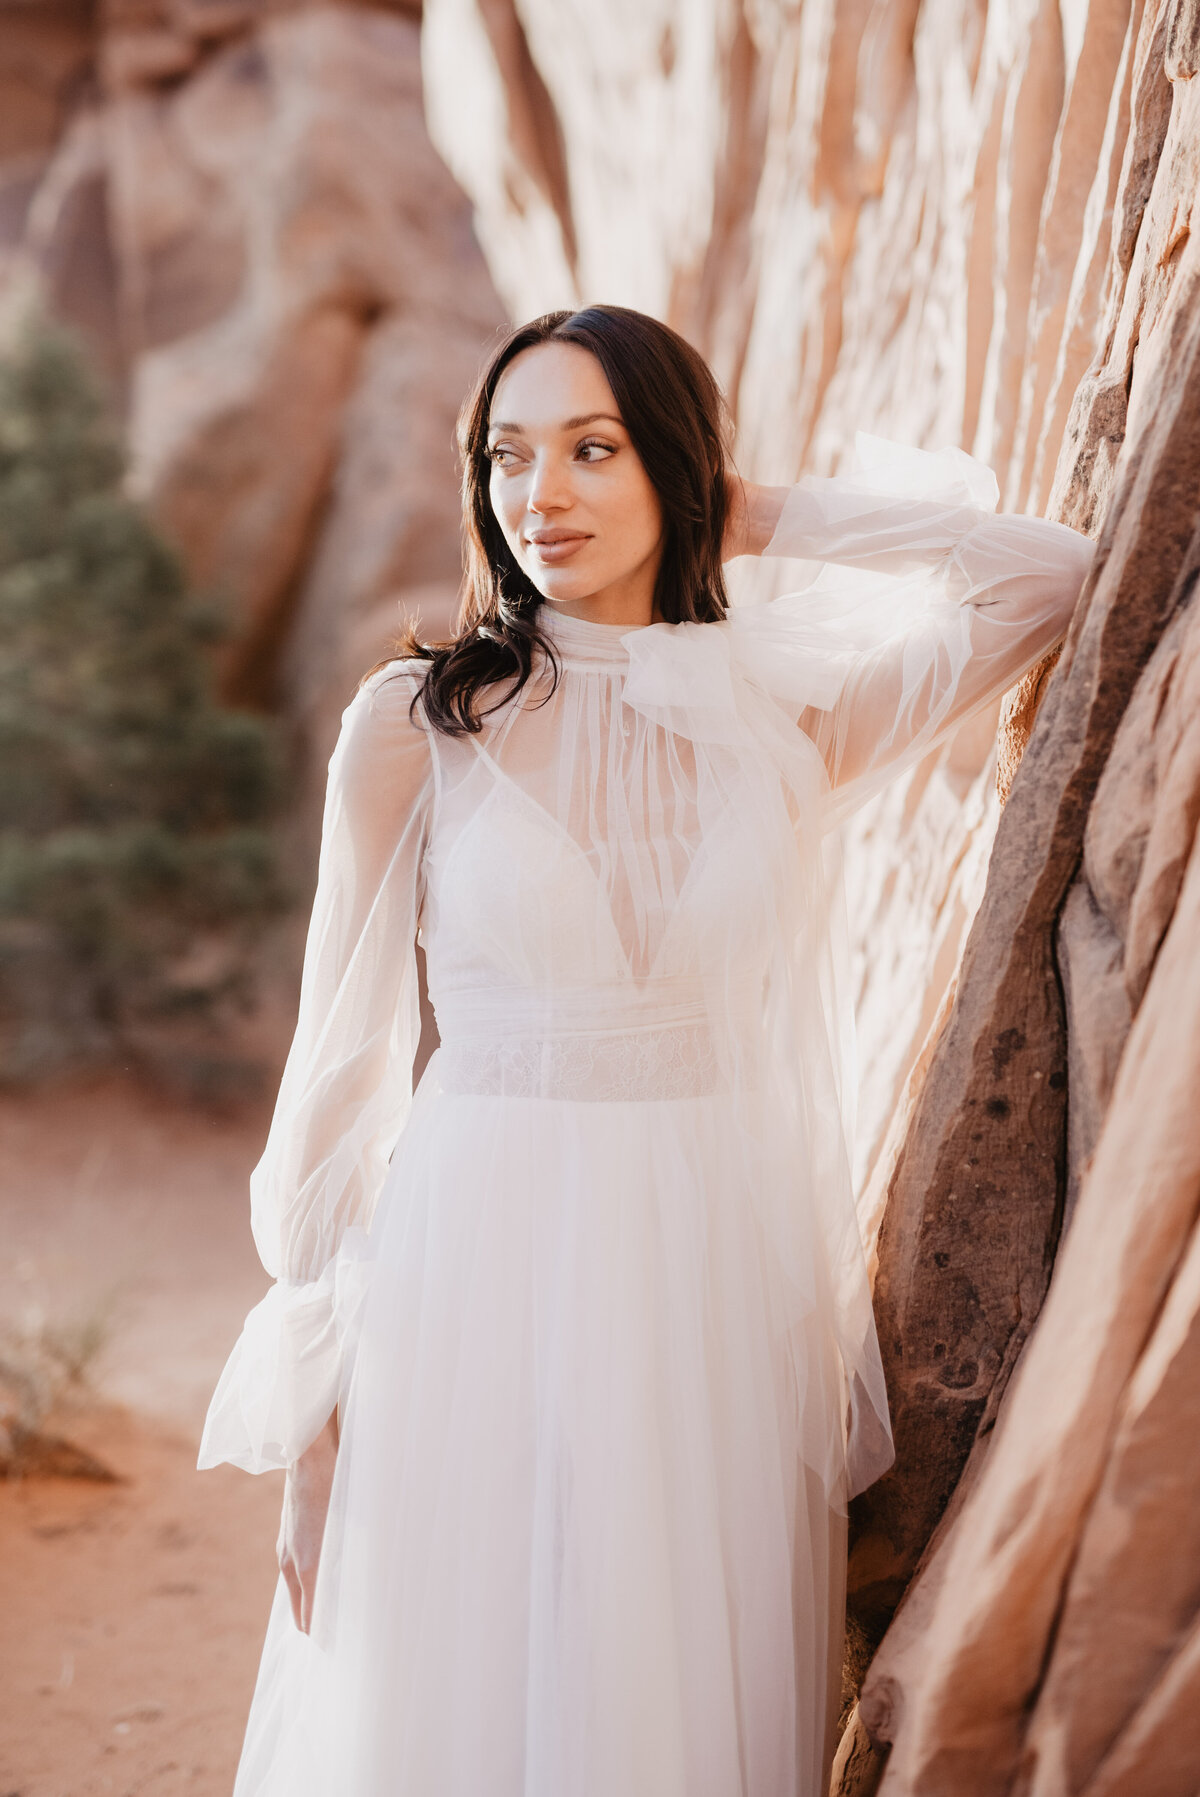 Utah elopement photographer captures bride wearing long sleeve wedding dress